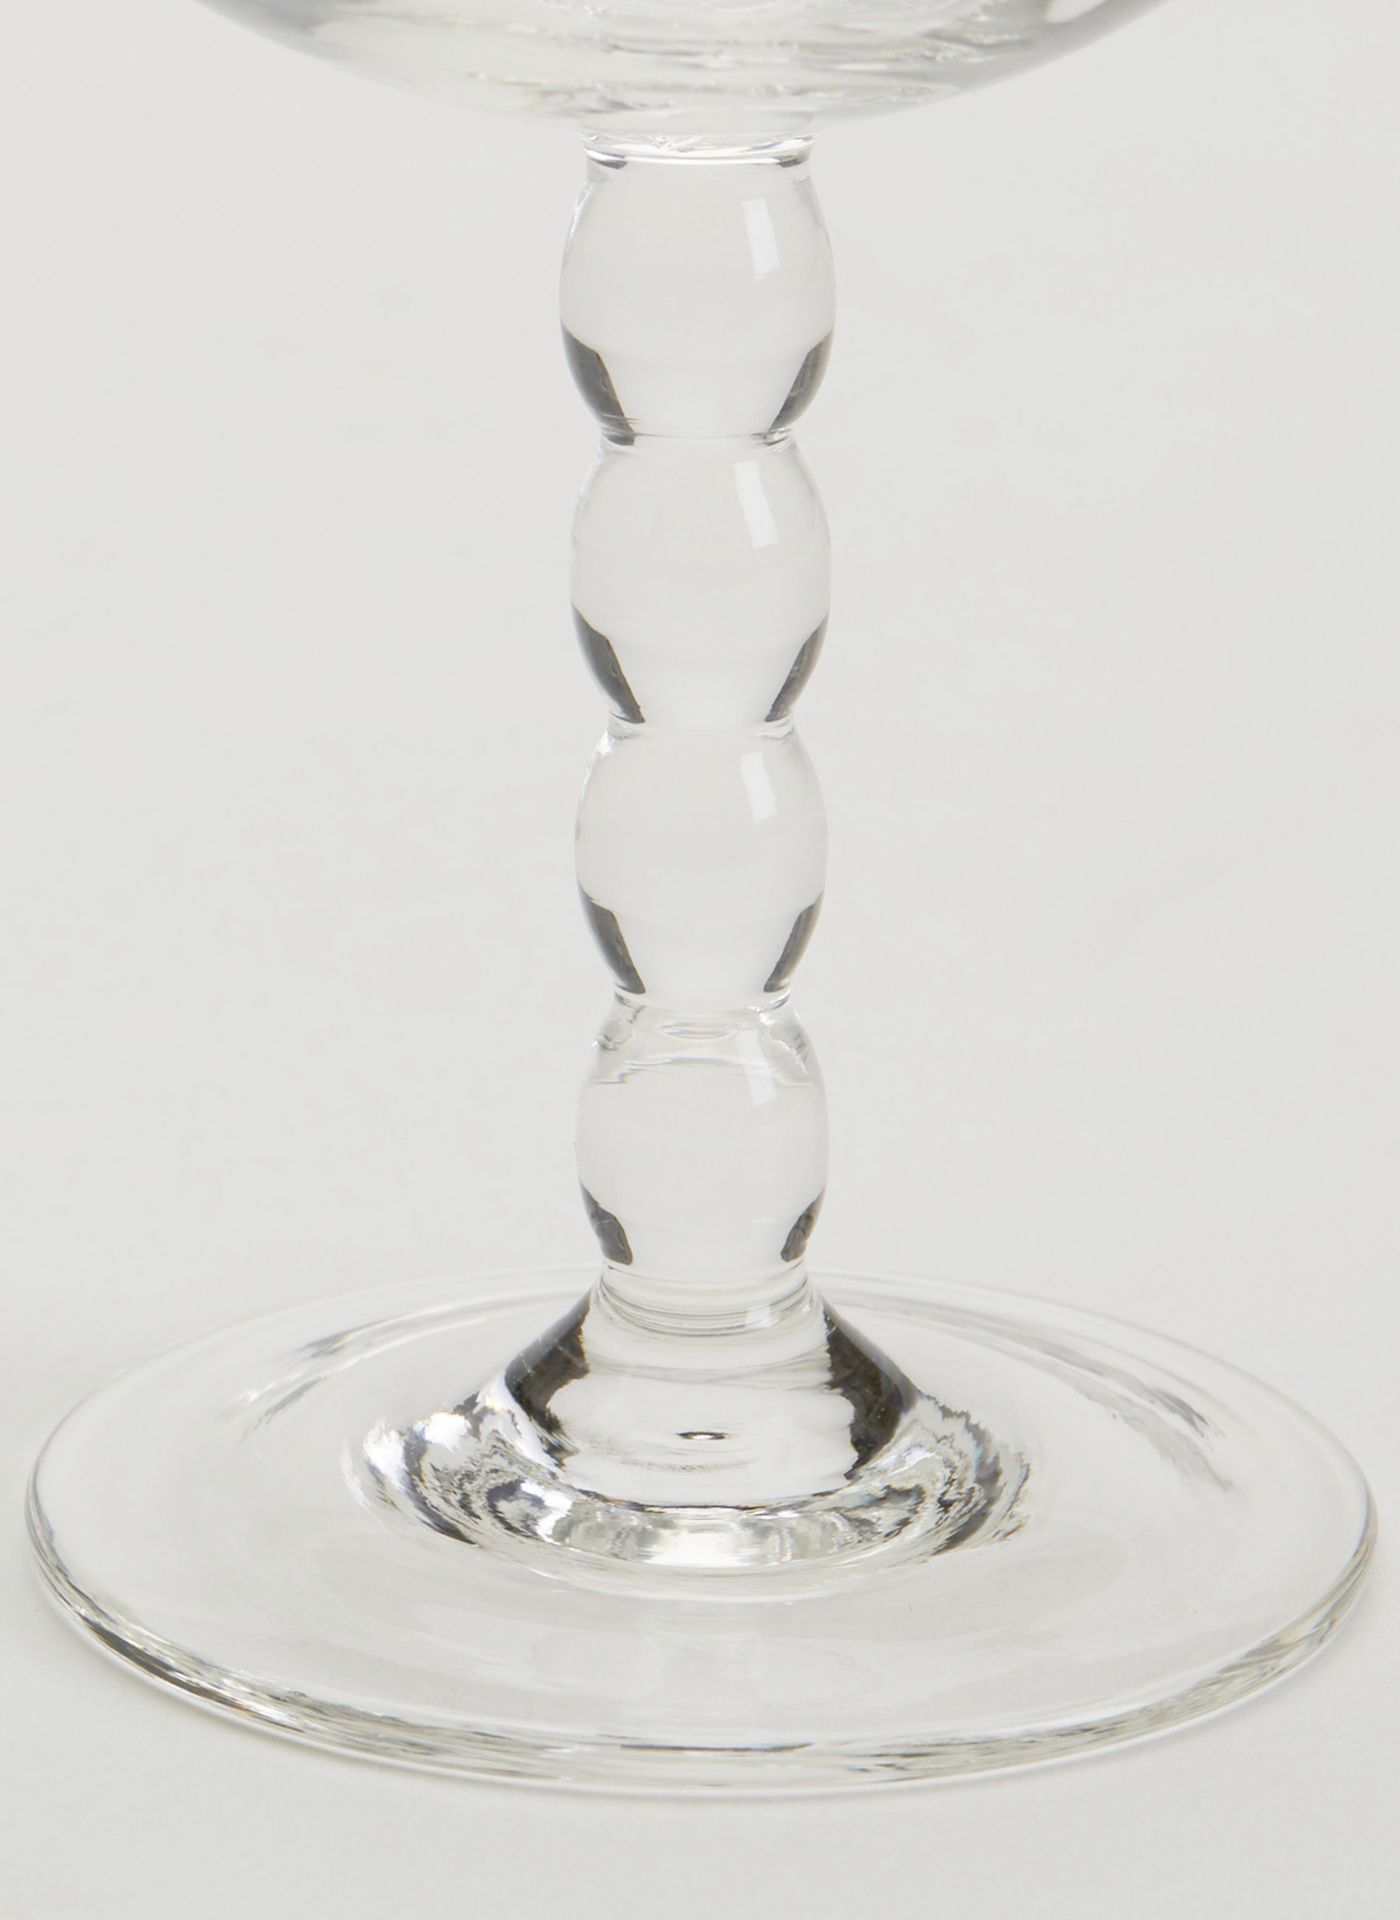 TWO VINTAGE VENETIAN WINE GLASSES 20TH C. - Image 2 of 3